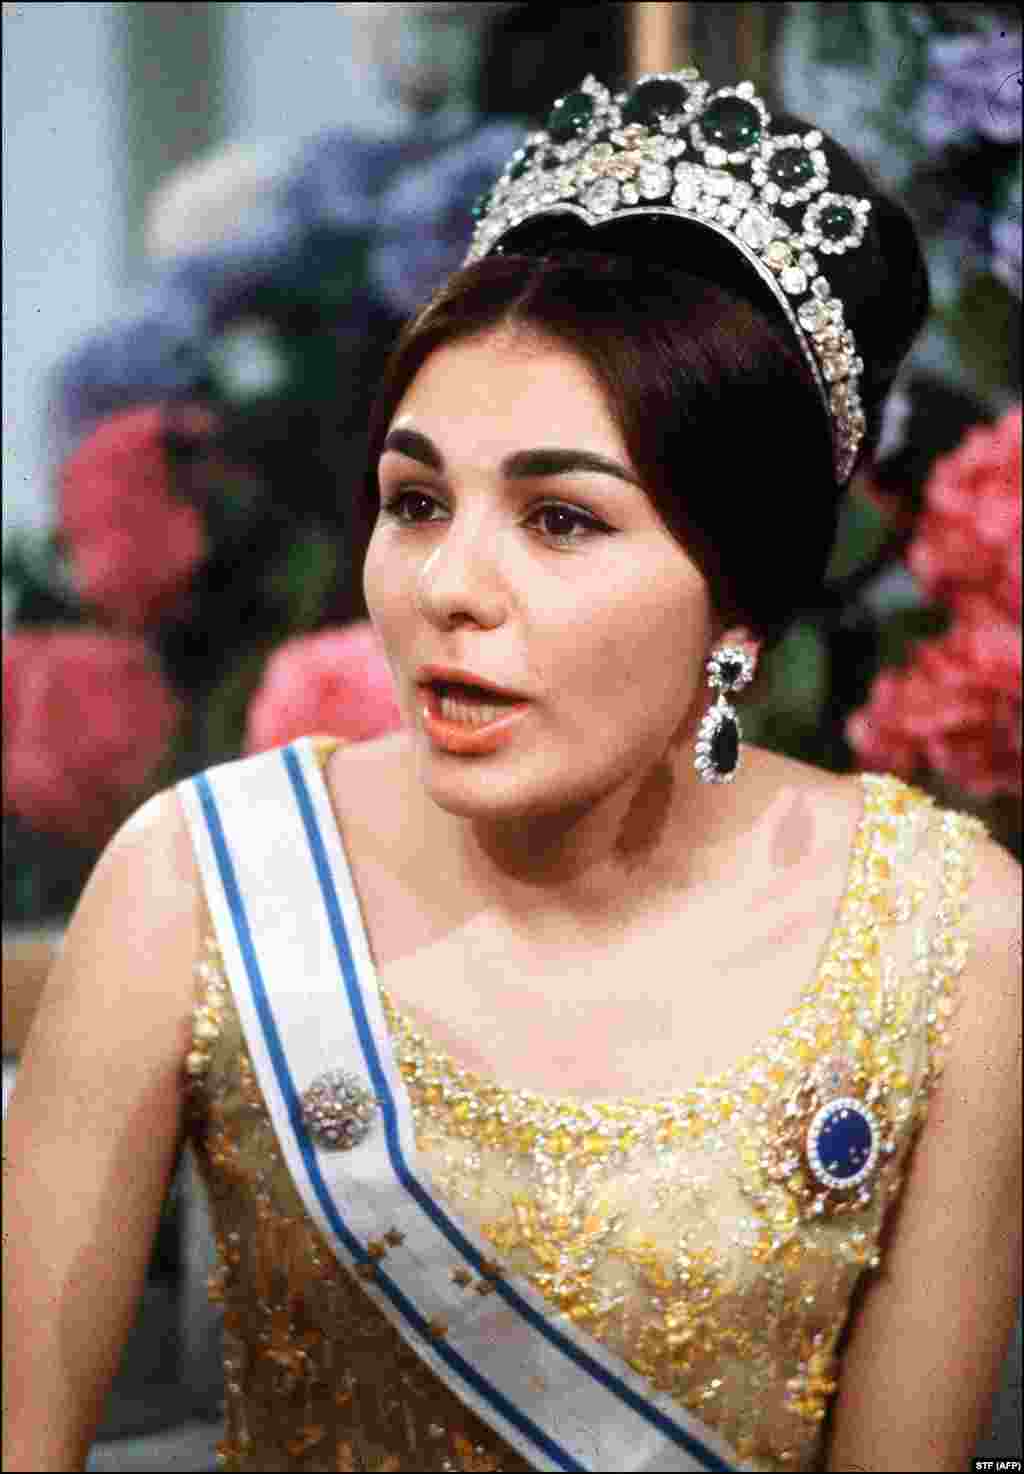 Empress Farah wearing her crown in Tehran in 1970.